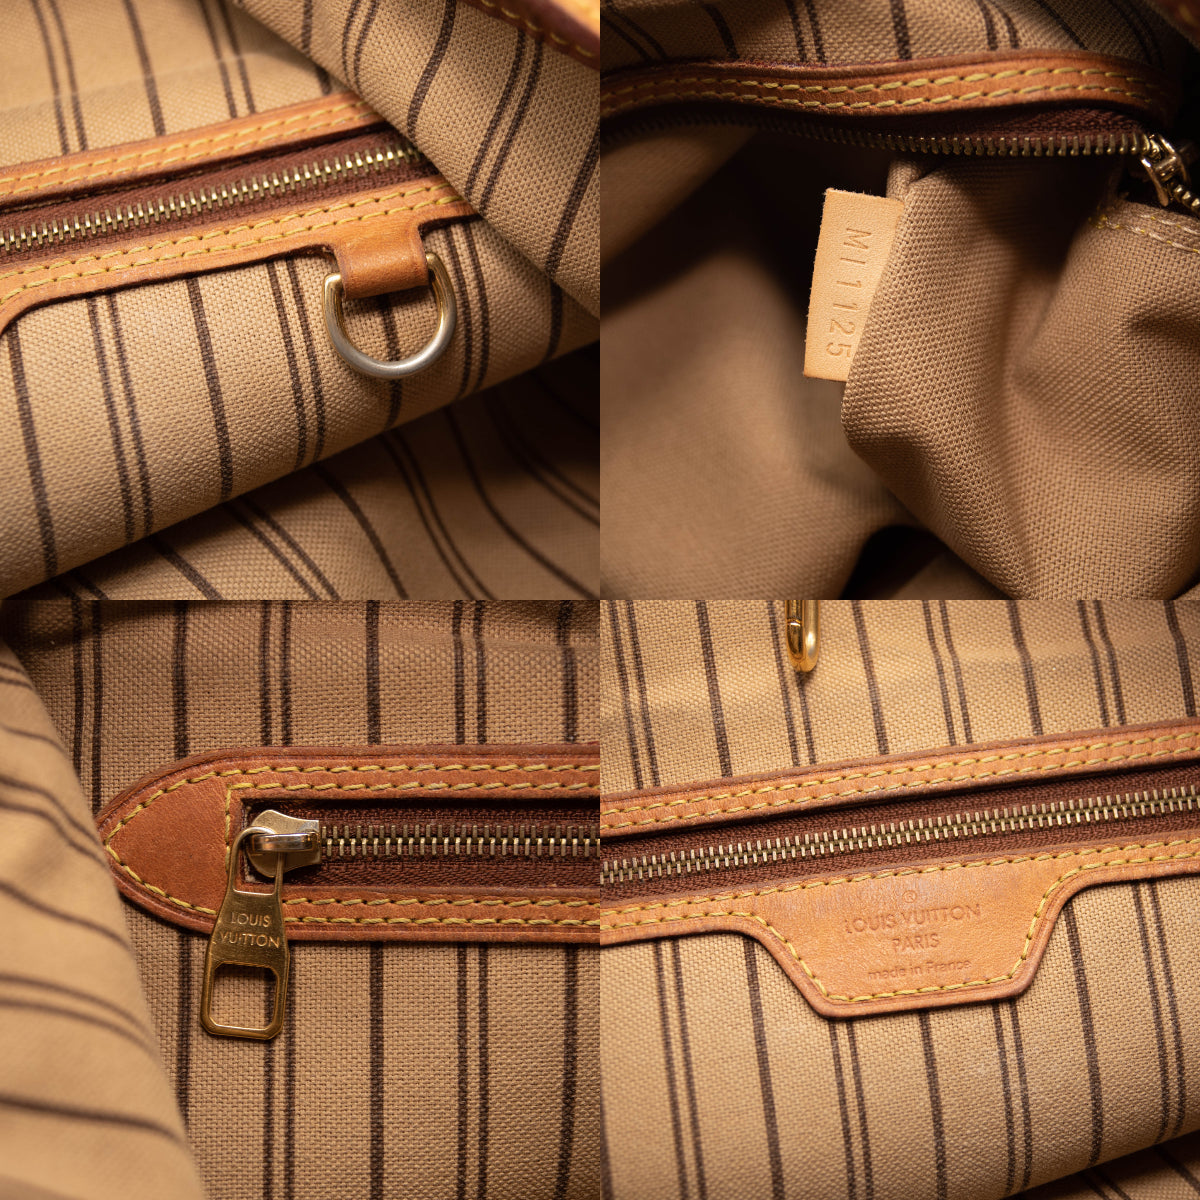 Louis Vuitton Delightful PM Monogram Hobo Bag